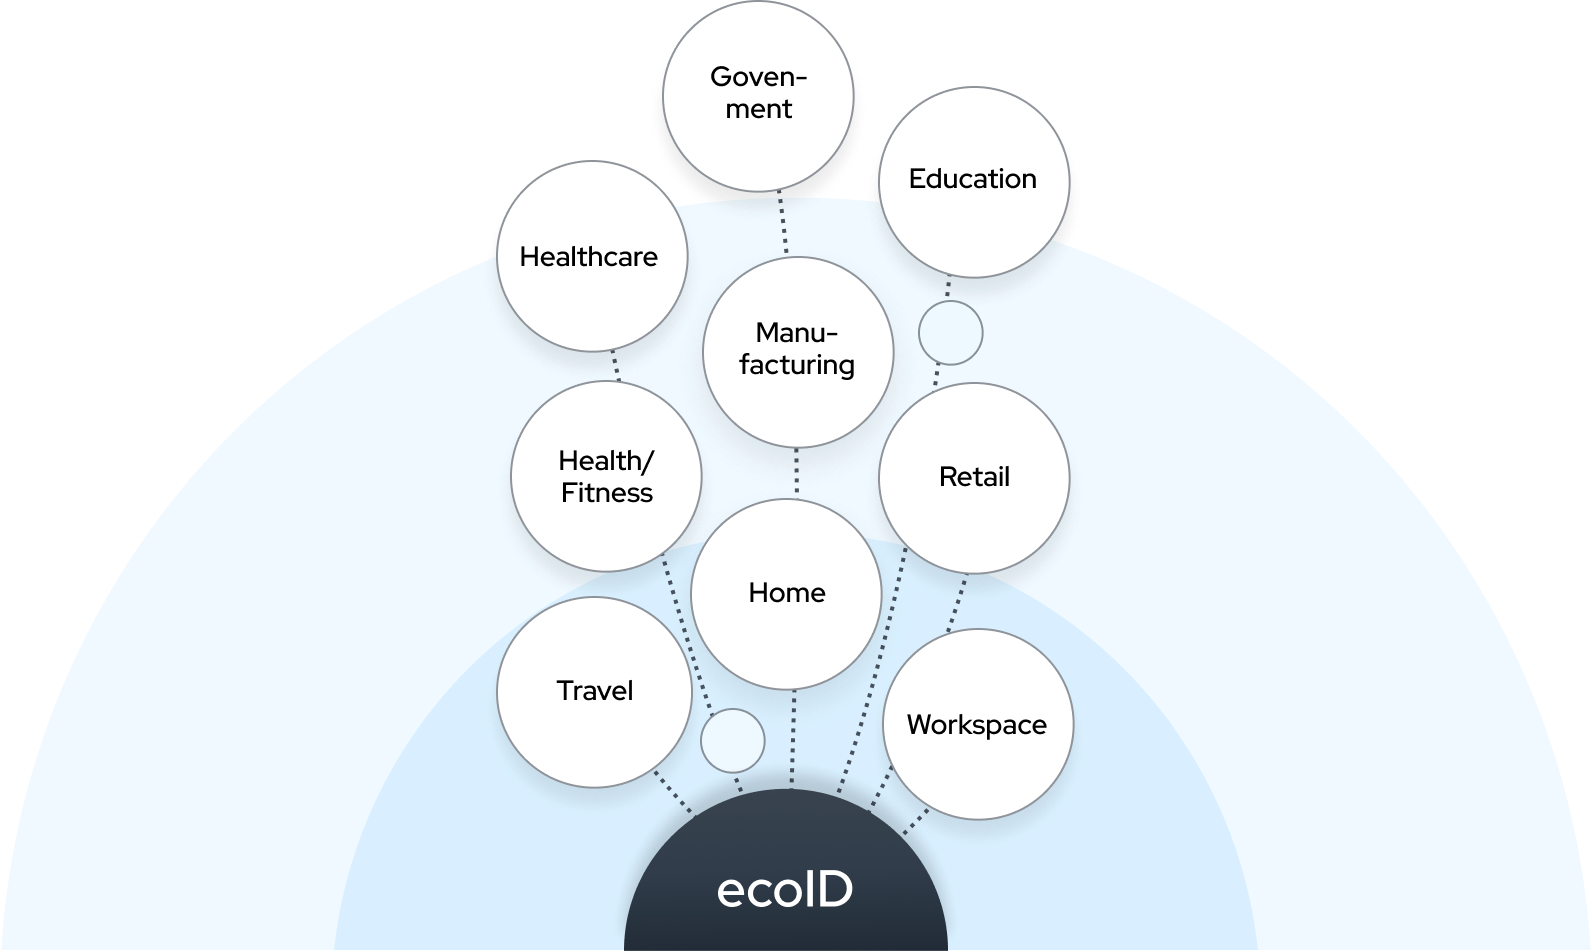 ecosystem of ecoID